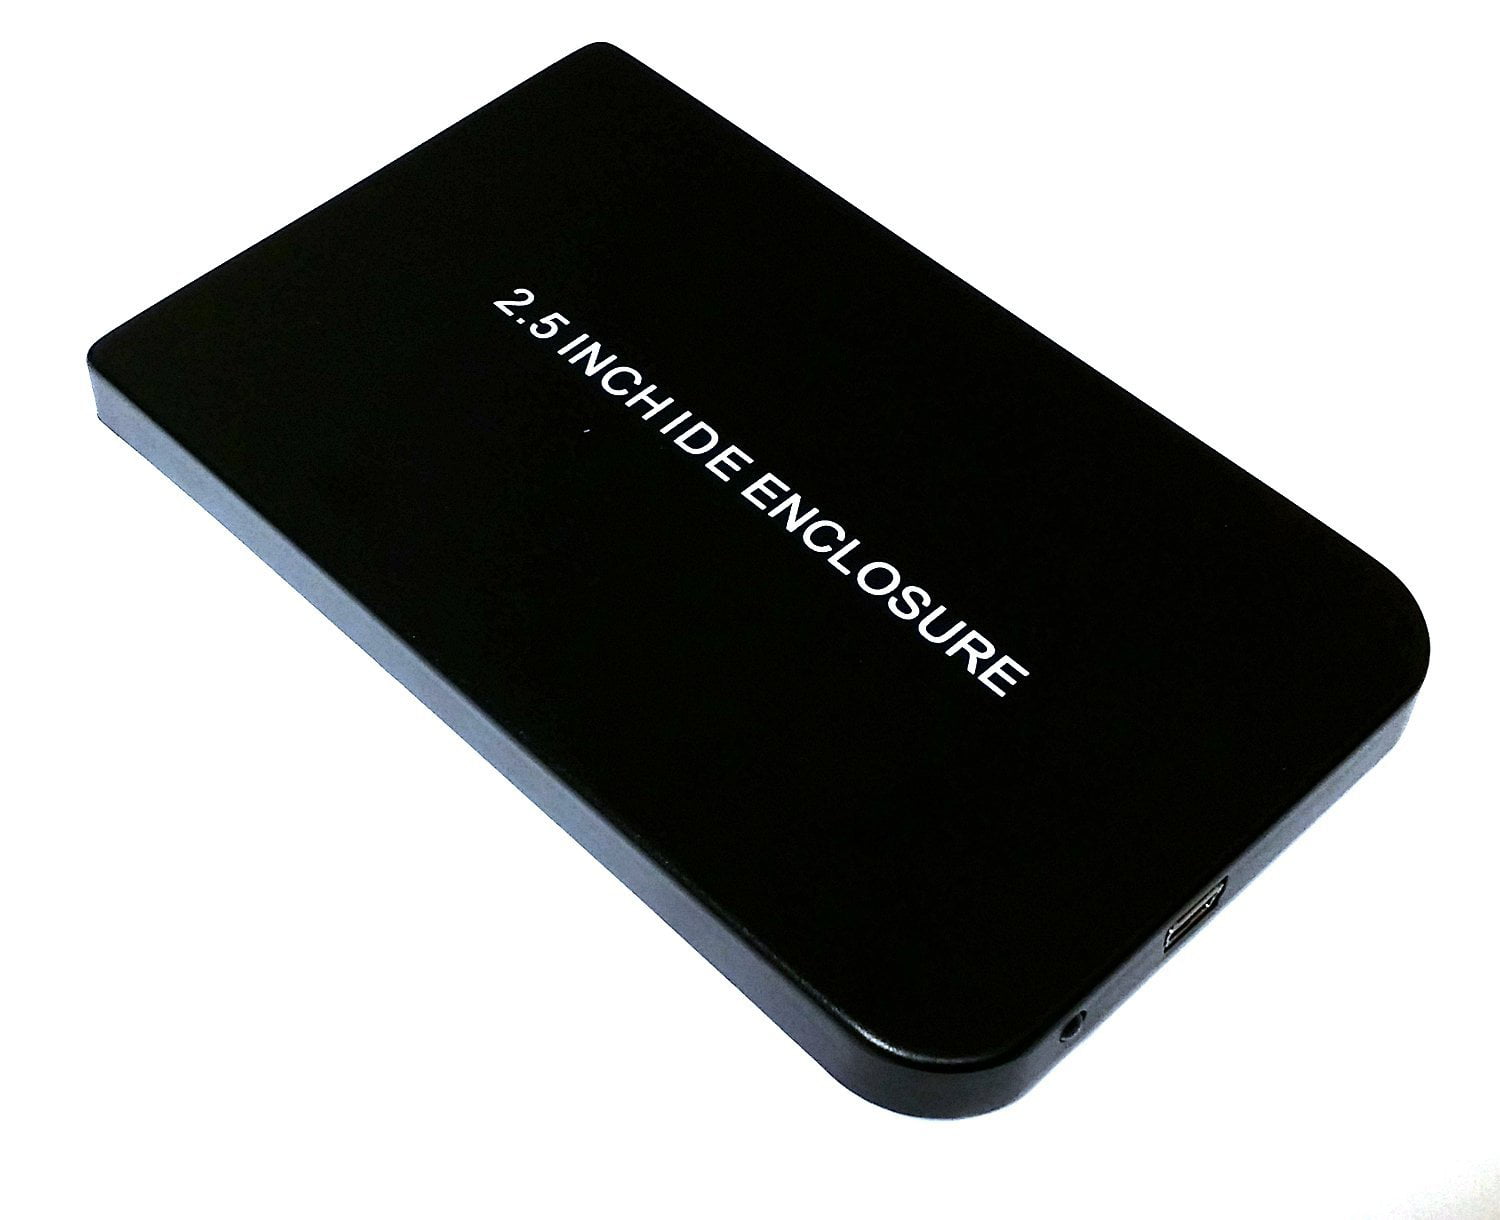 USB 2.5" Hard Drive IDE HDD HD External Enclosure Case DT 